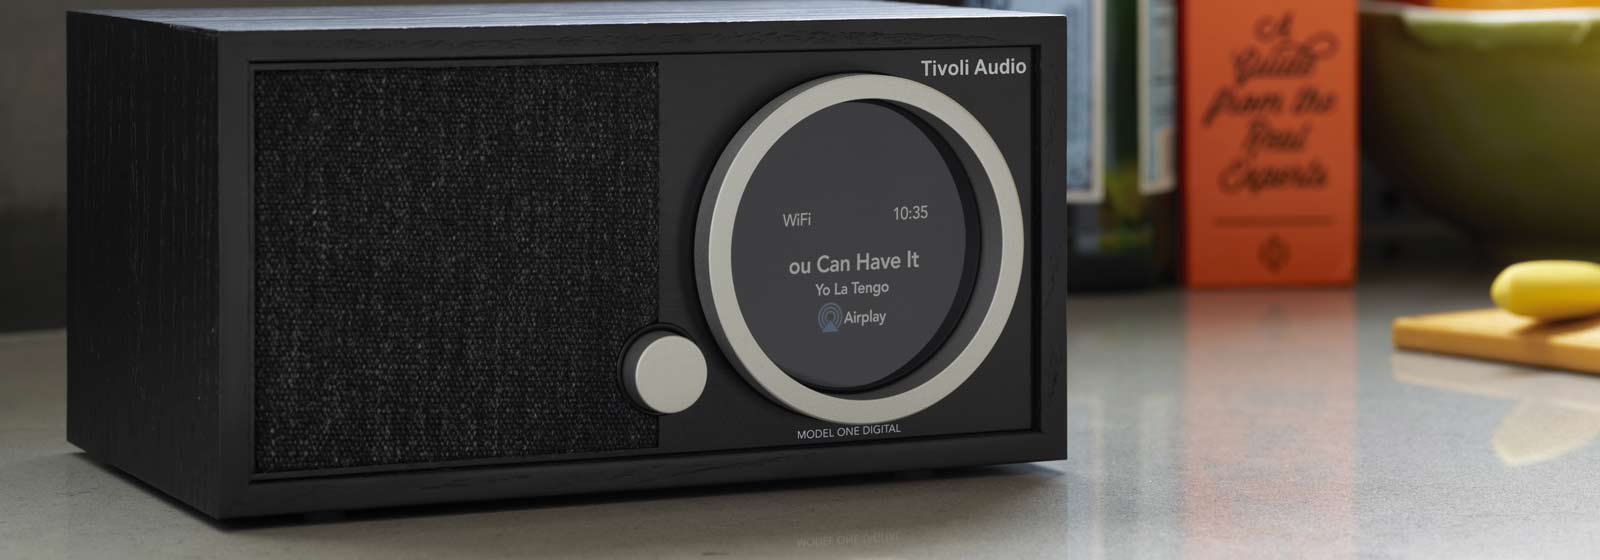 Tivoli-Audio-Model-One-Digital